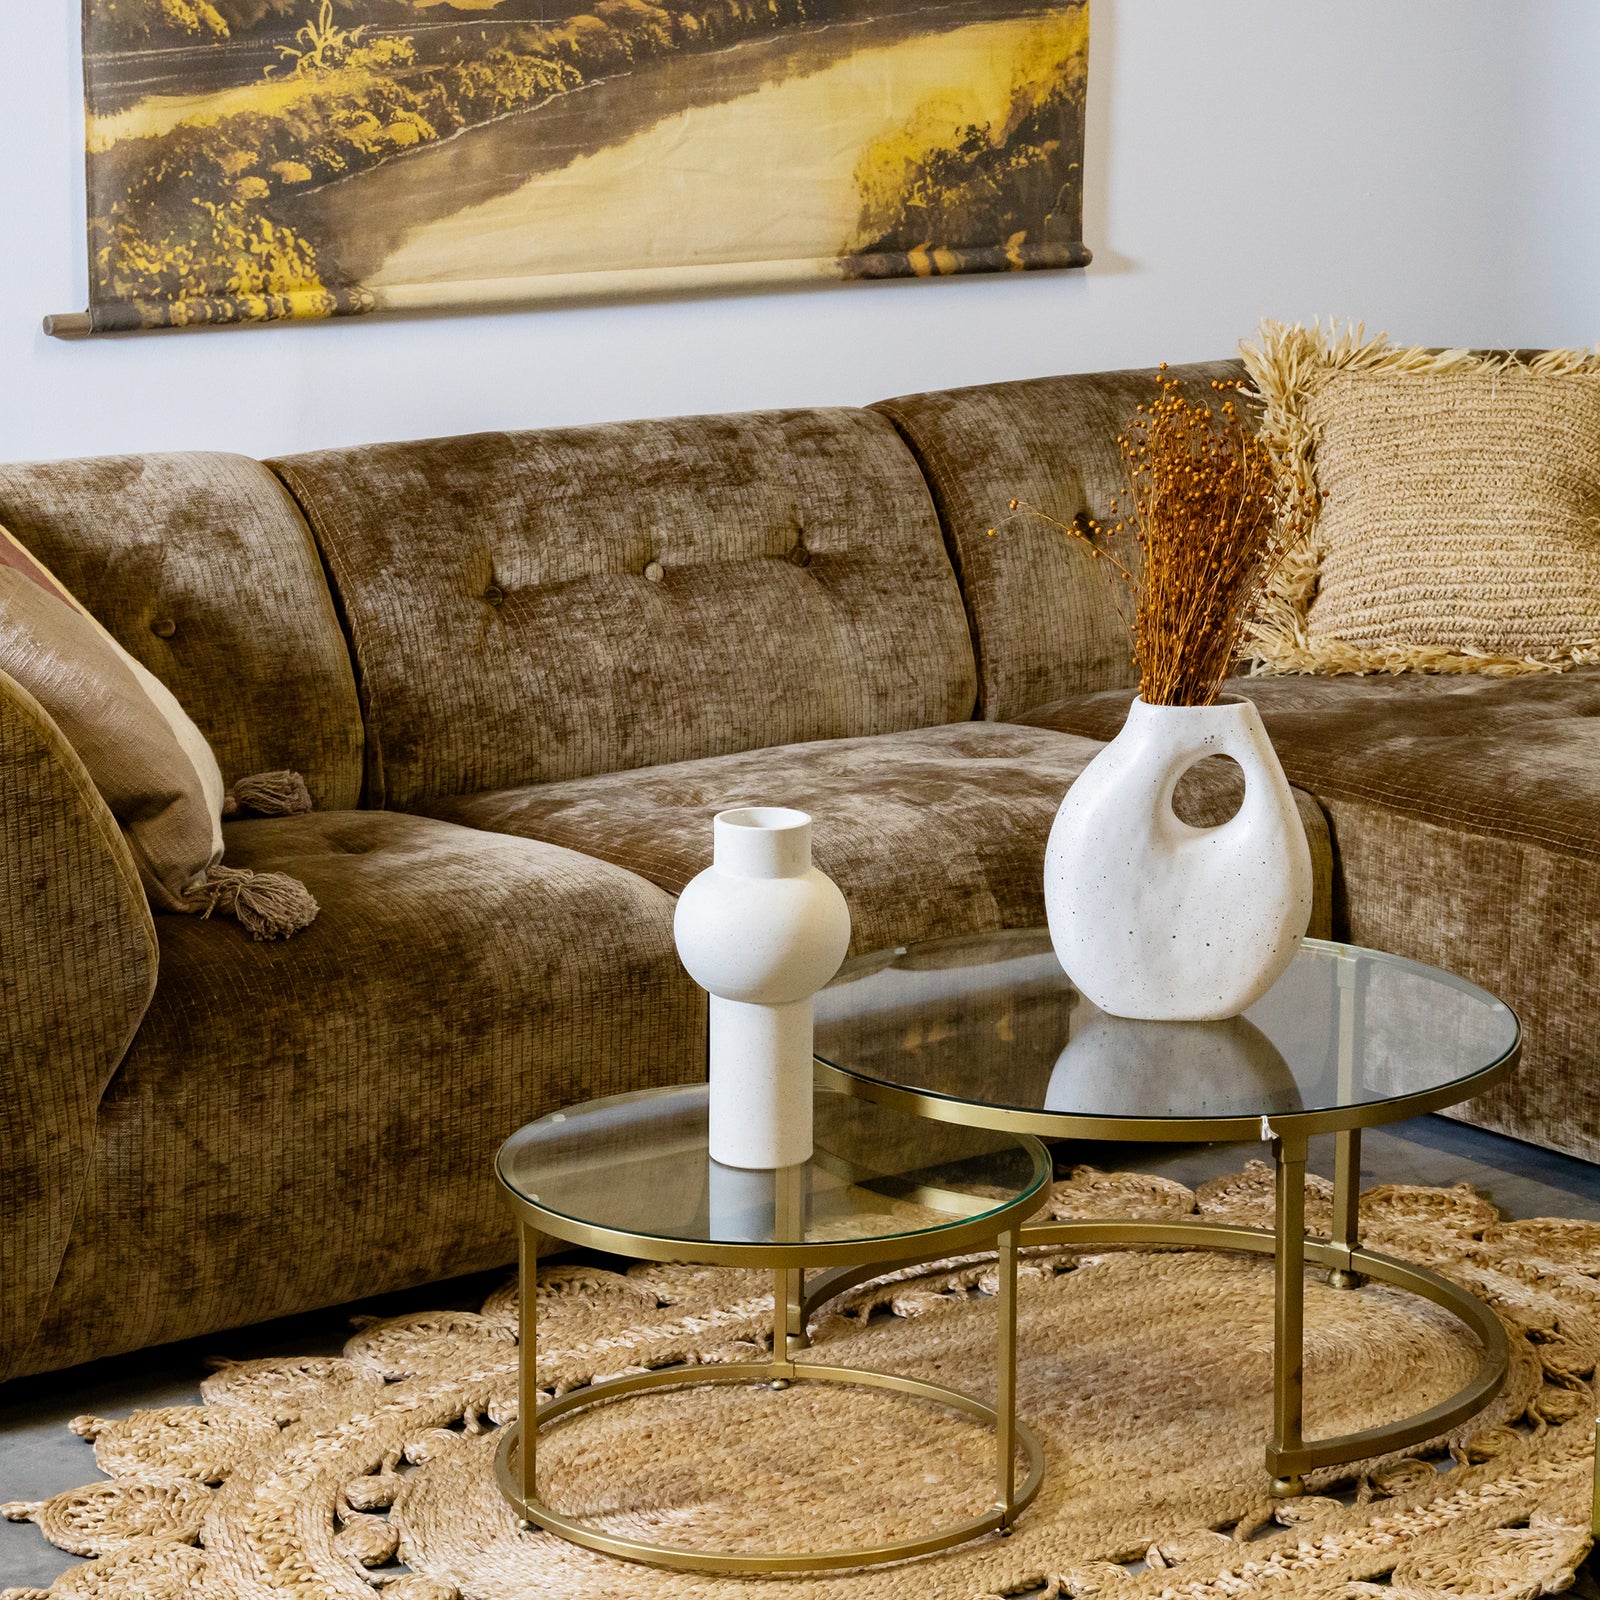 HKliving Vint Couch: Element Middle 1,5-Seat

Velvet Aged Gold